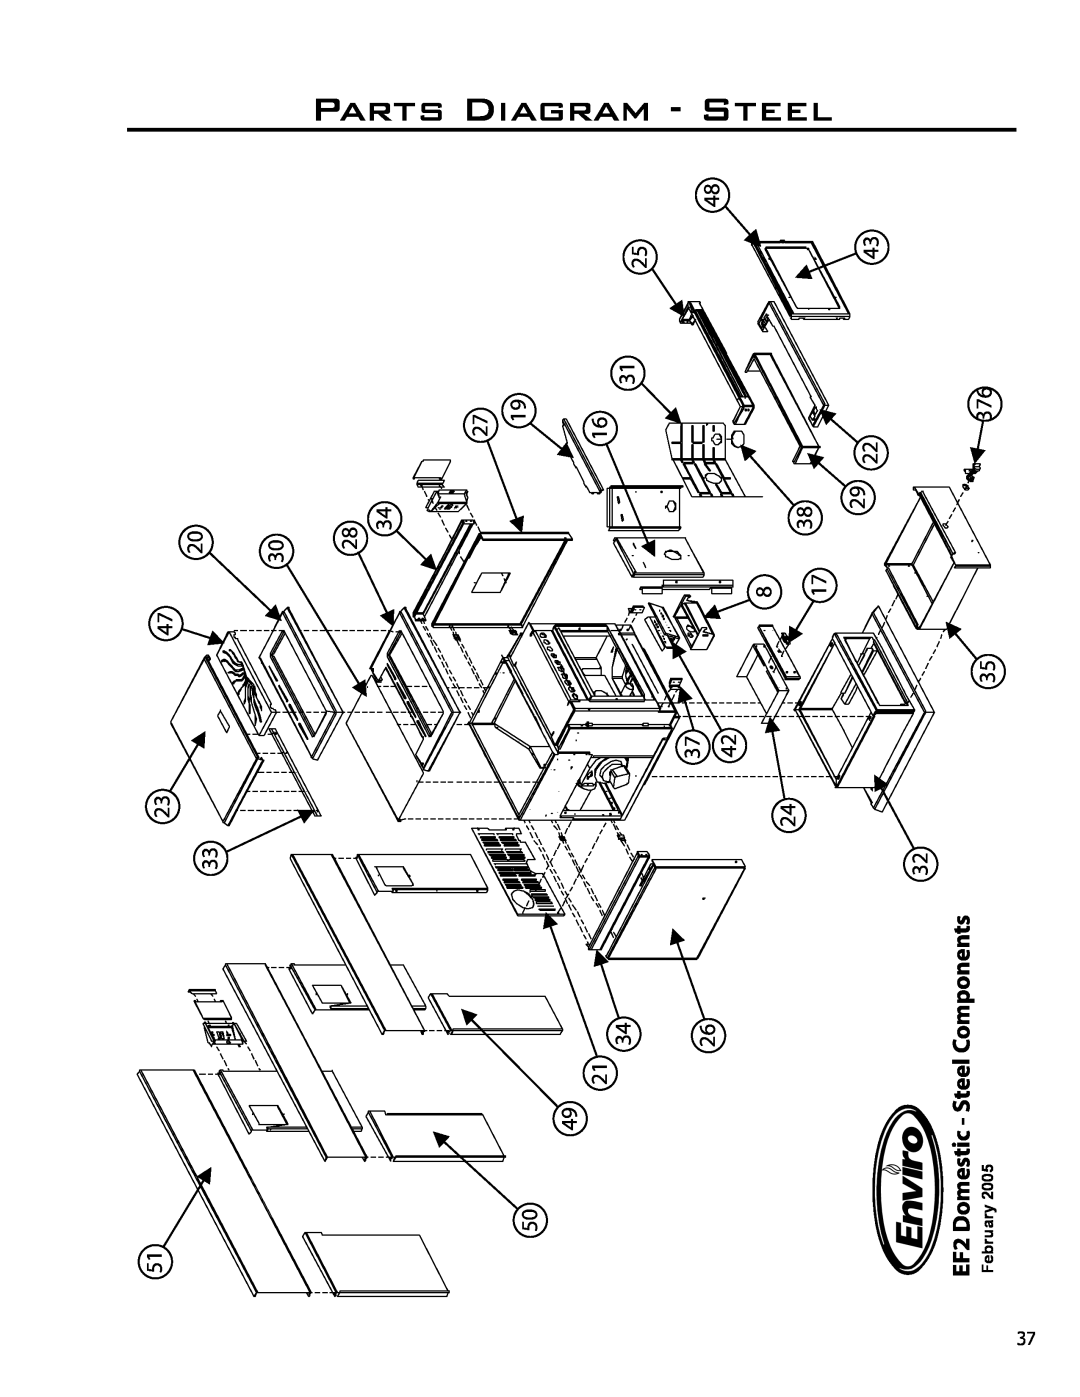 Enviro EF-119 owner manual Parts, Diagram - Steel, February 